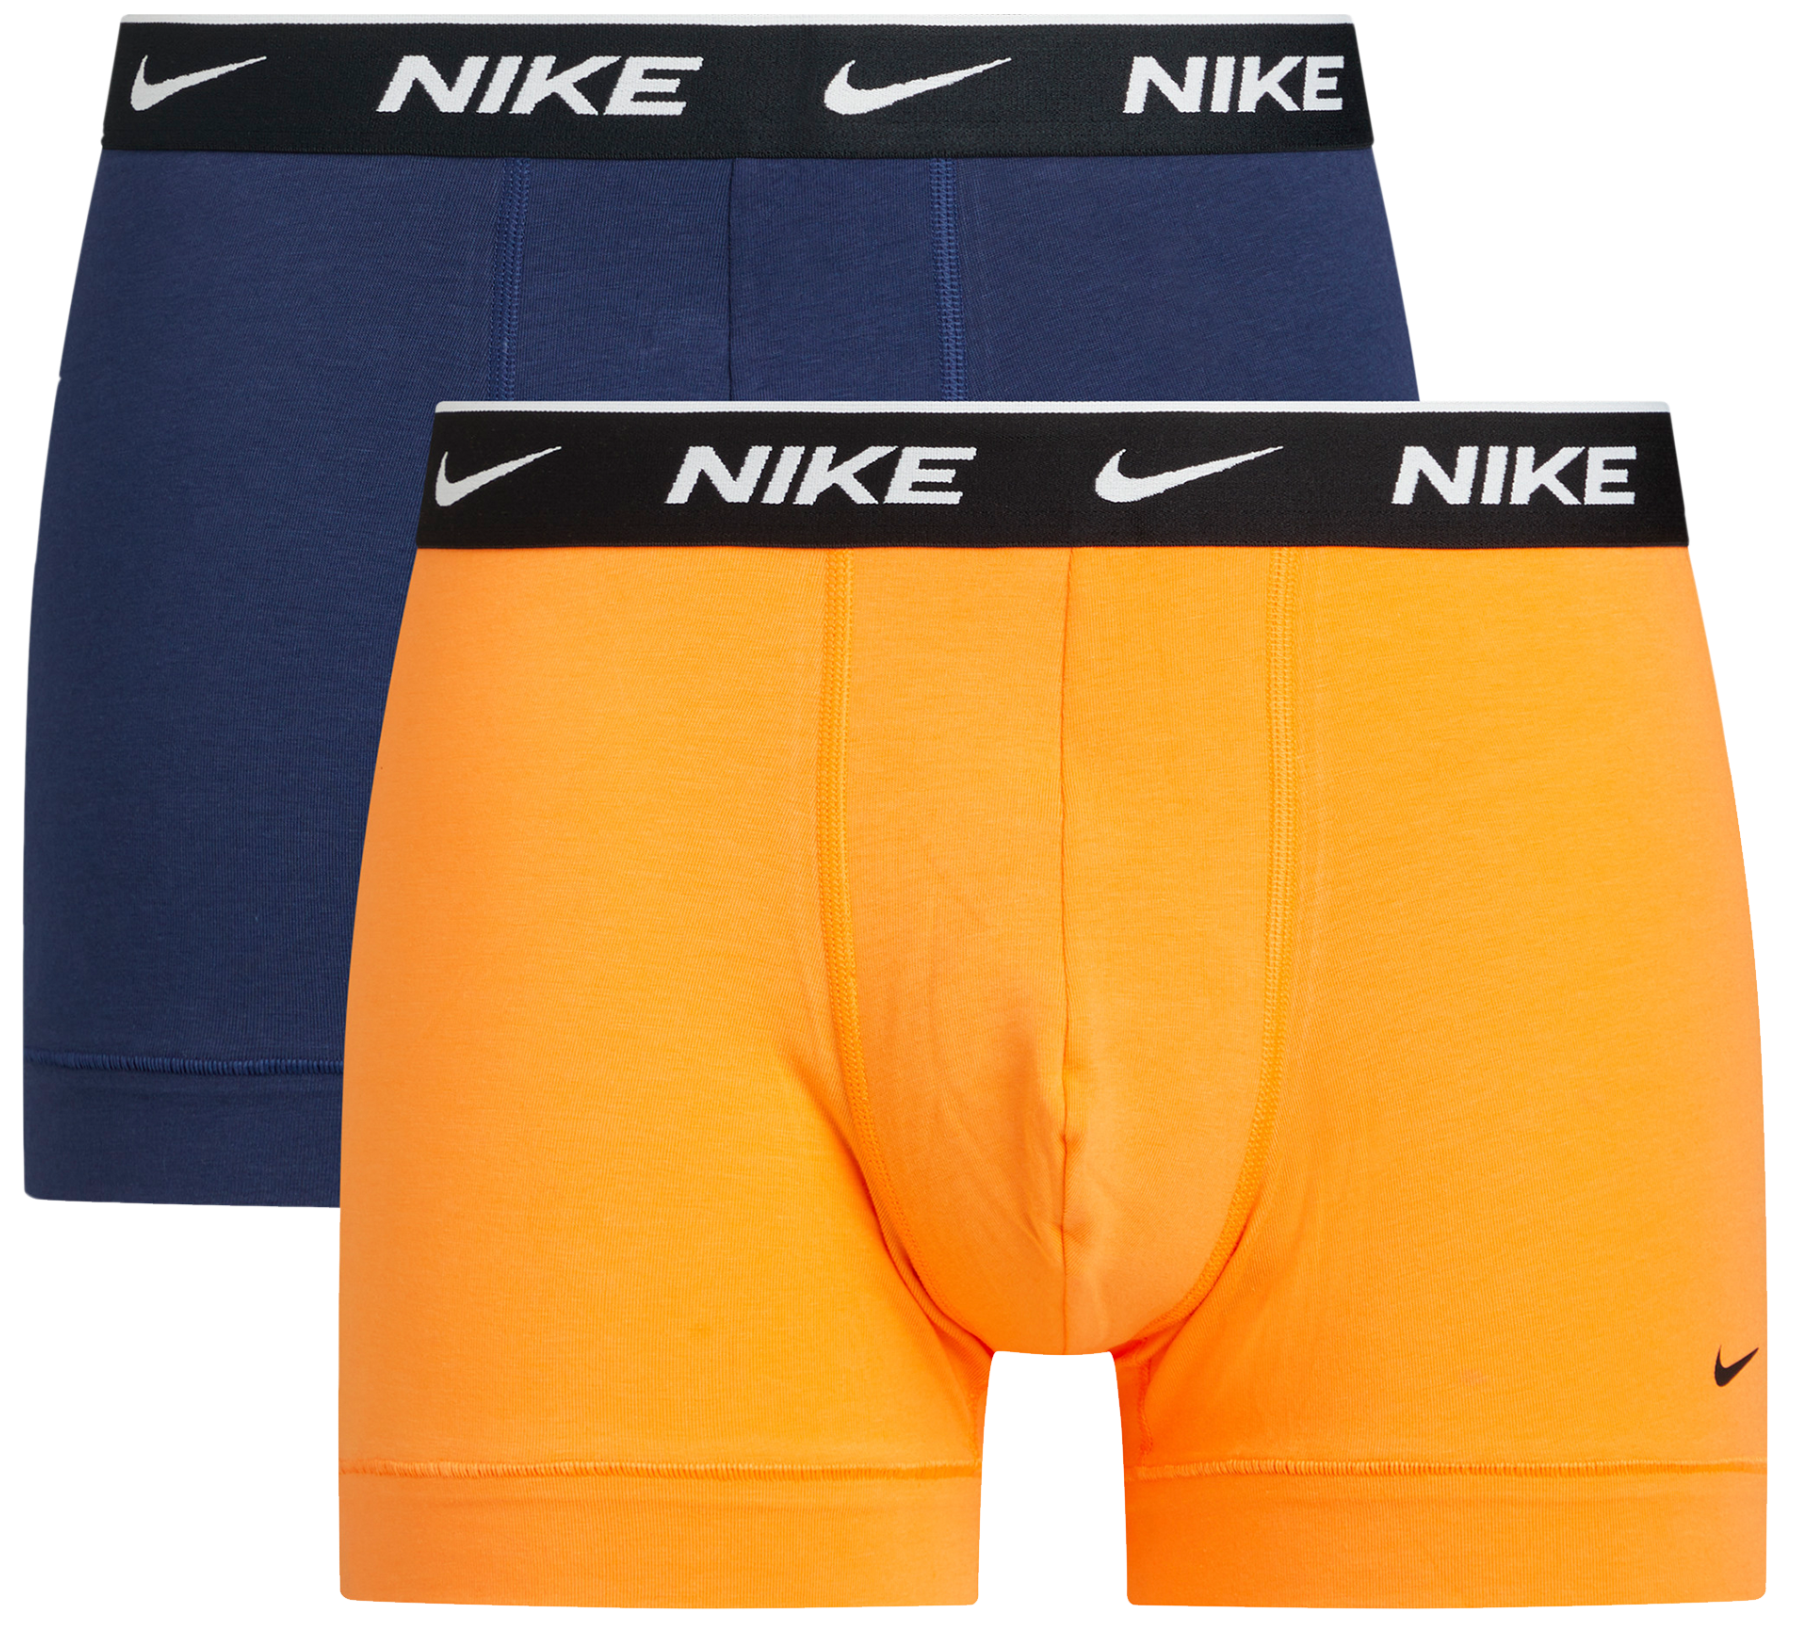 Calzoncillos bóxer Nike Cotton Trunk Boxershort 2er Pack